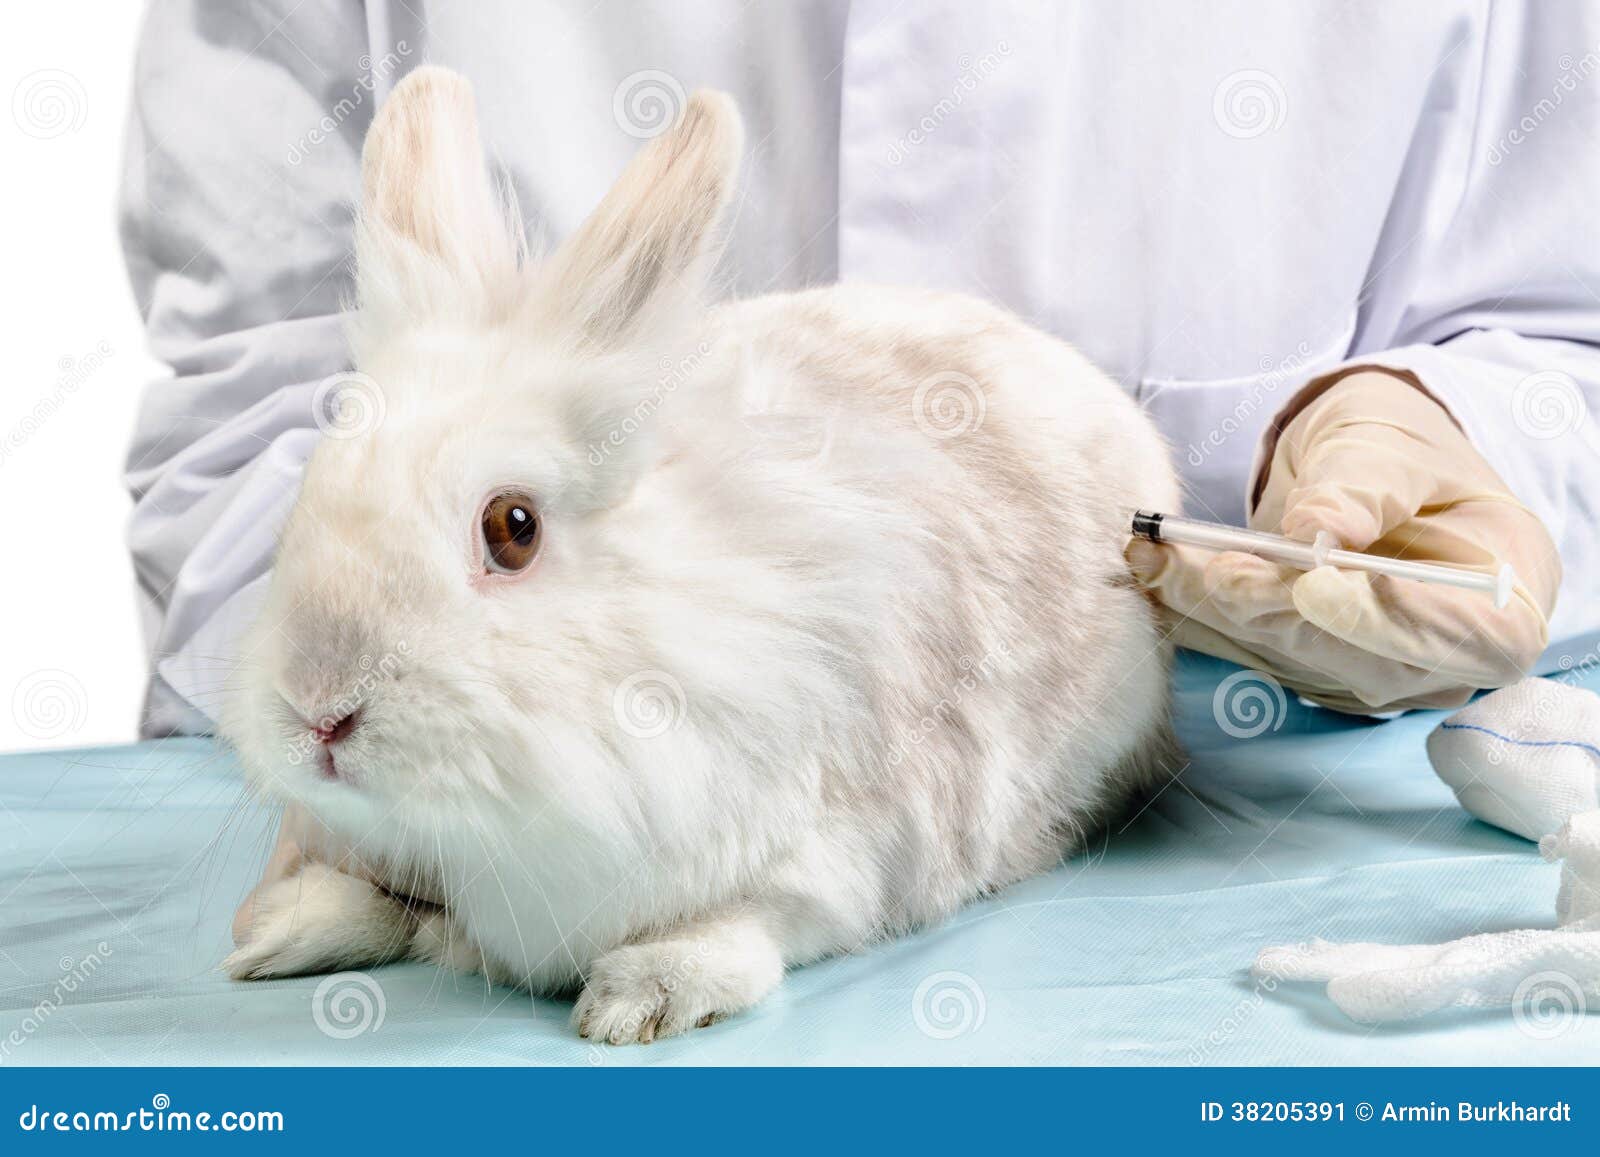 https://thumbs.dreamstime.com/z/rabbit-doctor-provide-veterinarian-treatment-rabbits-syringe-38205391.jpg